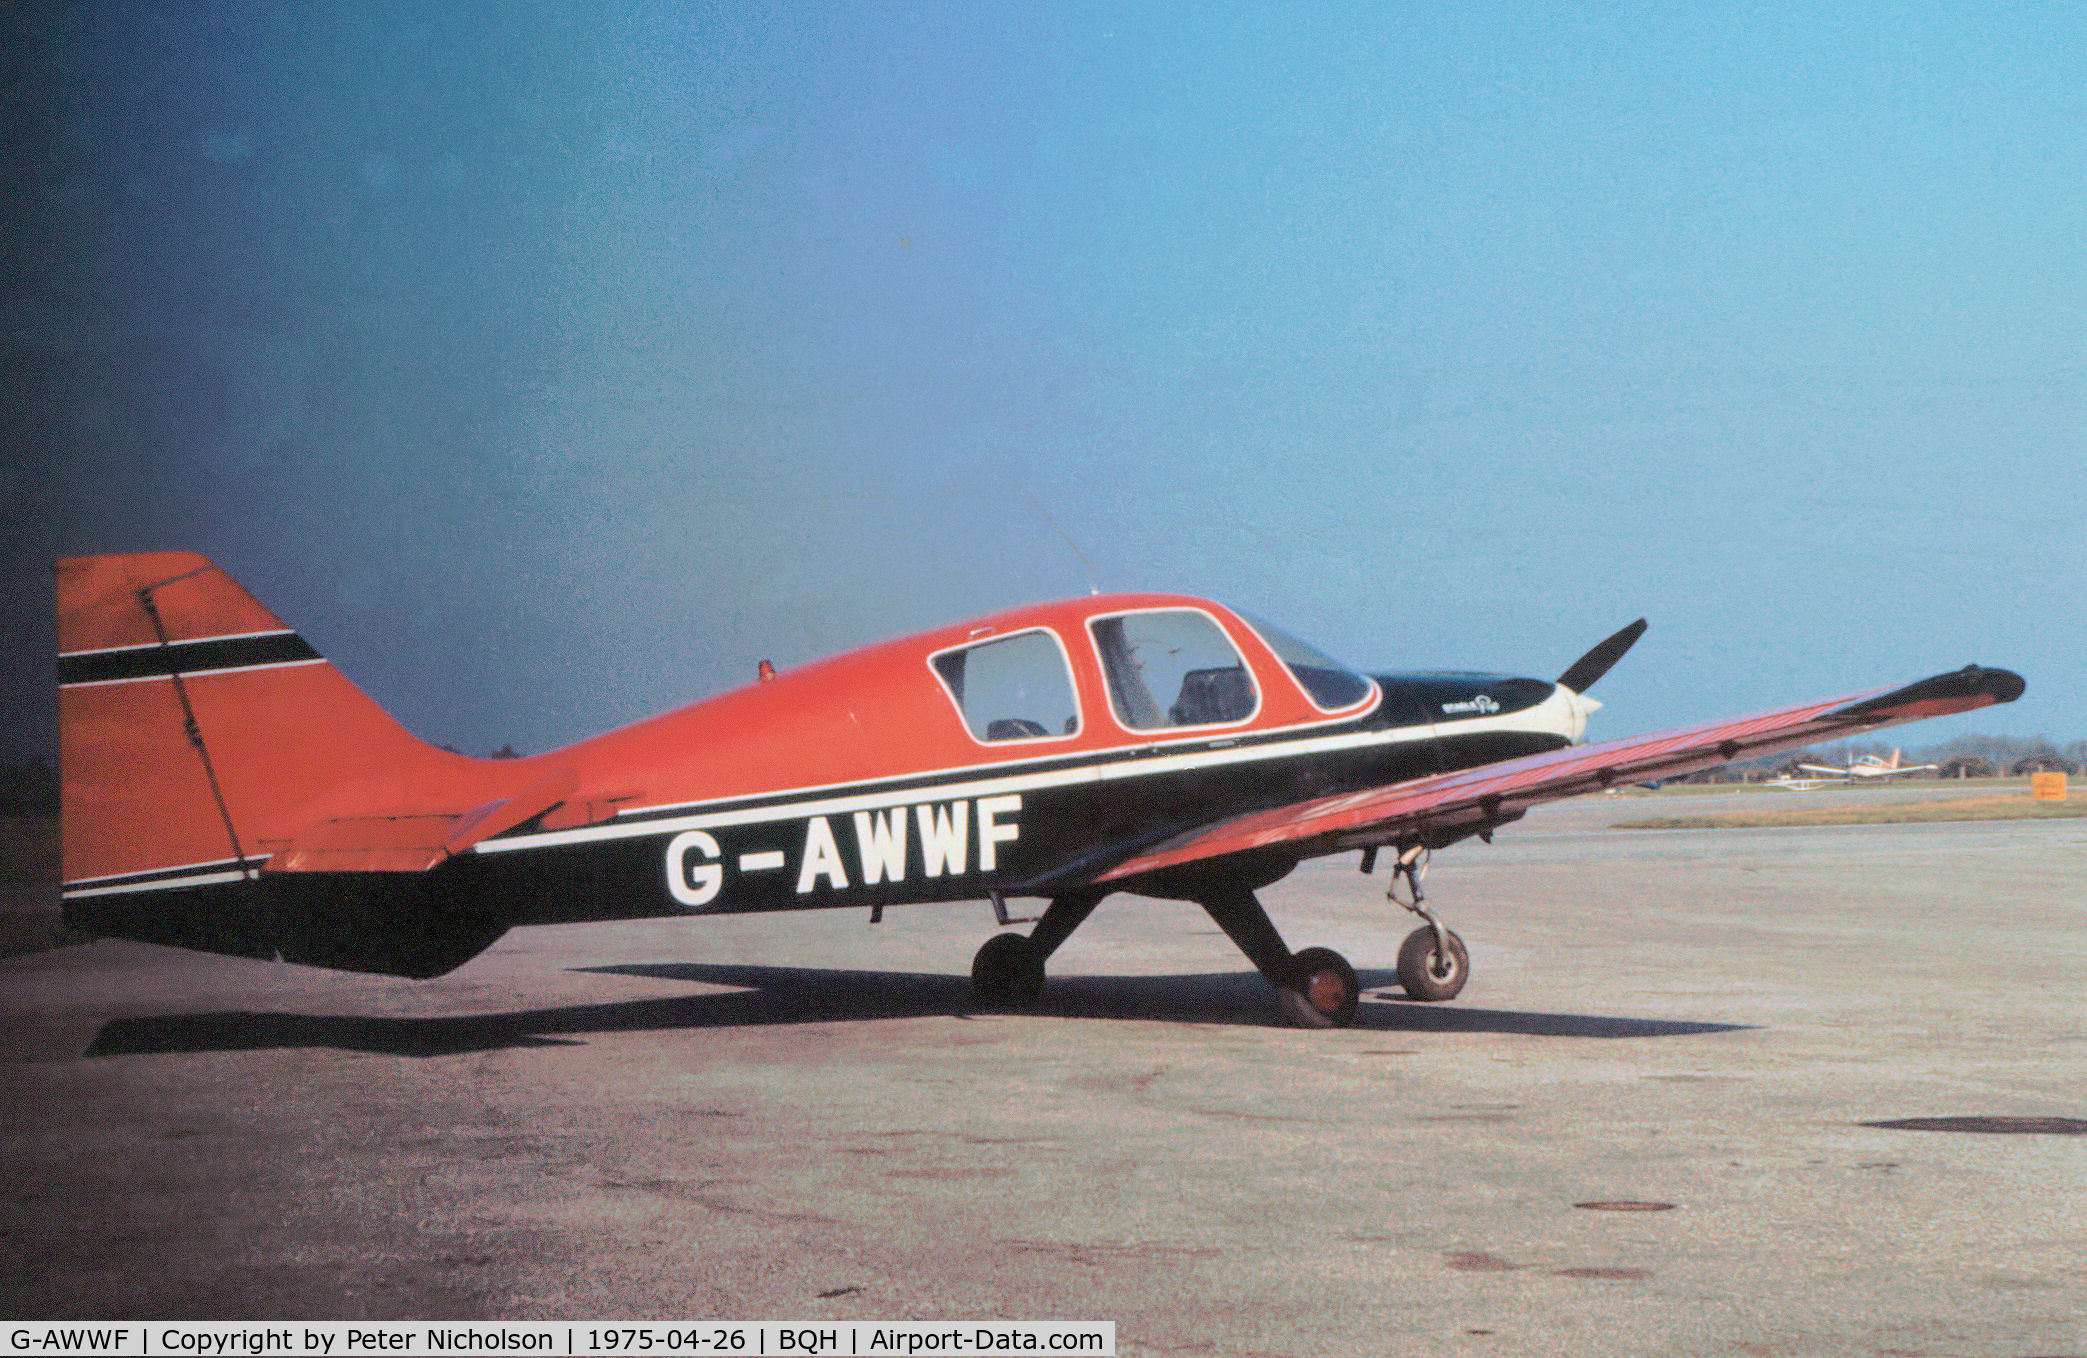 G-AWWF, 1969 Beagle B-121 Pup Series 1 (Pup 100) C/N B121-033, Beagle Pup 1 as seen at Biggin Hill in April 1975.